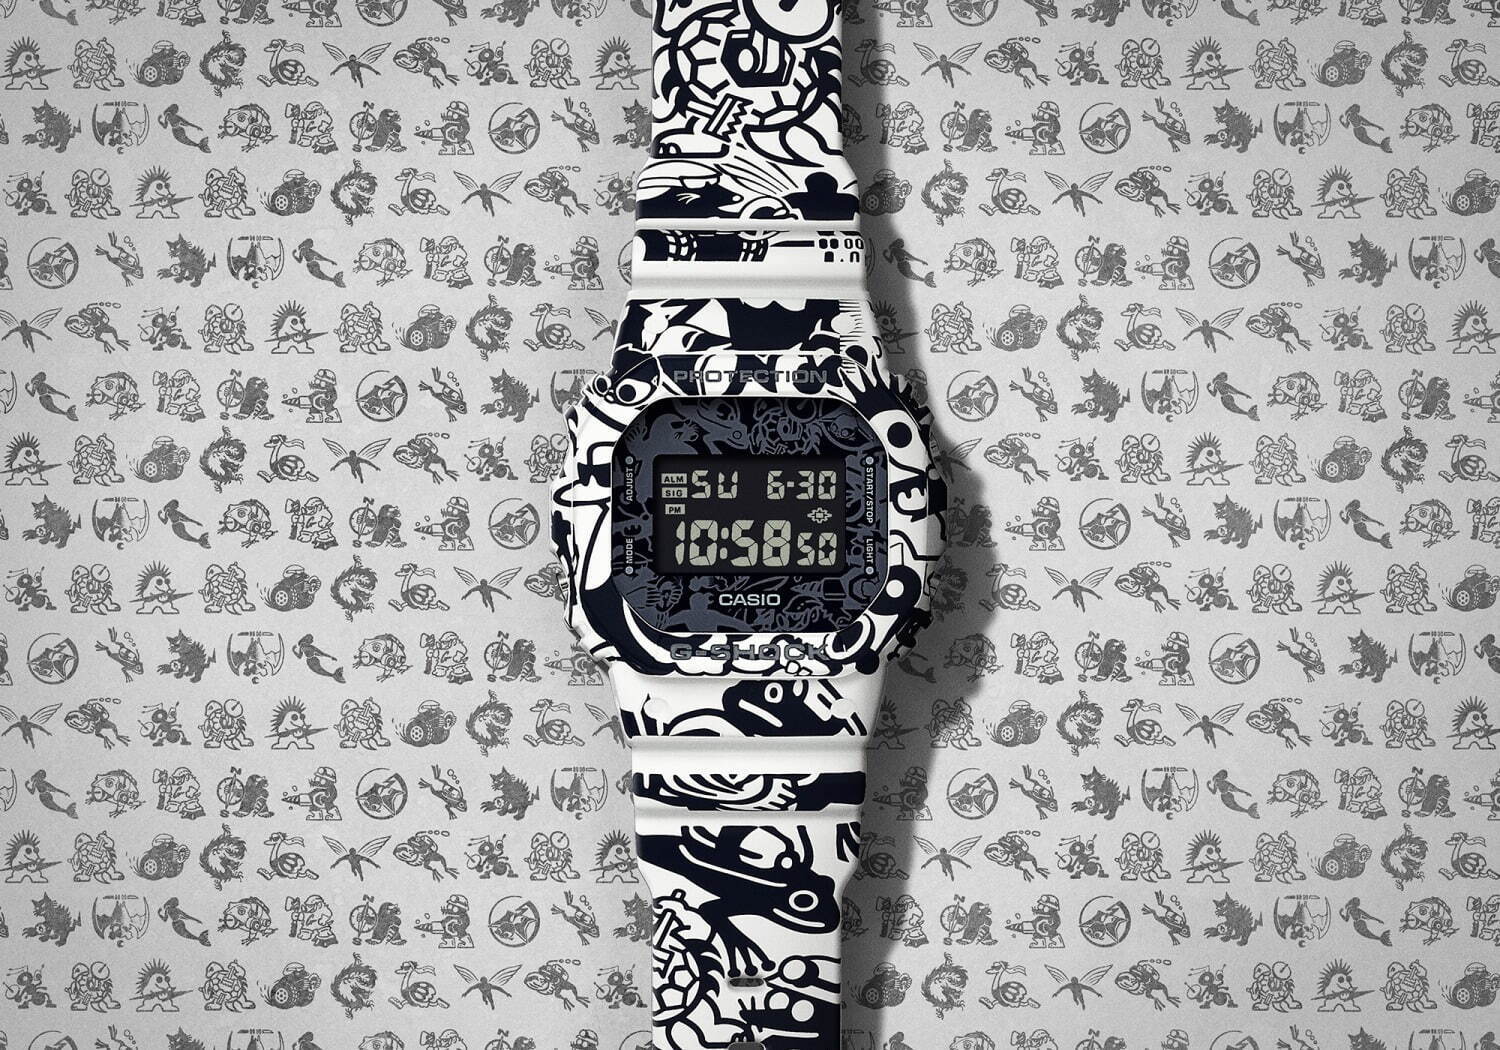 G Shock アニマル モチーフのカモ柄腕時計 マスターオブg シリーズの歴代キャラが集結 ファッションプレス